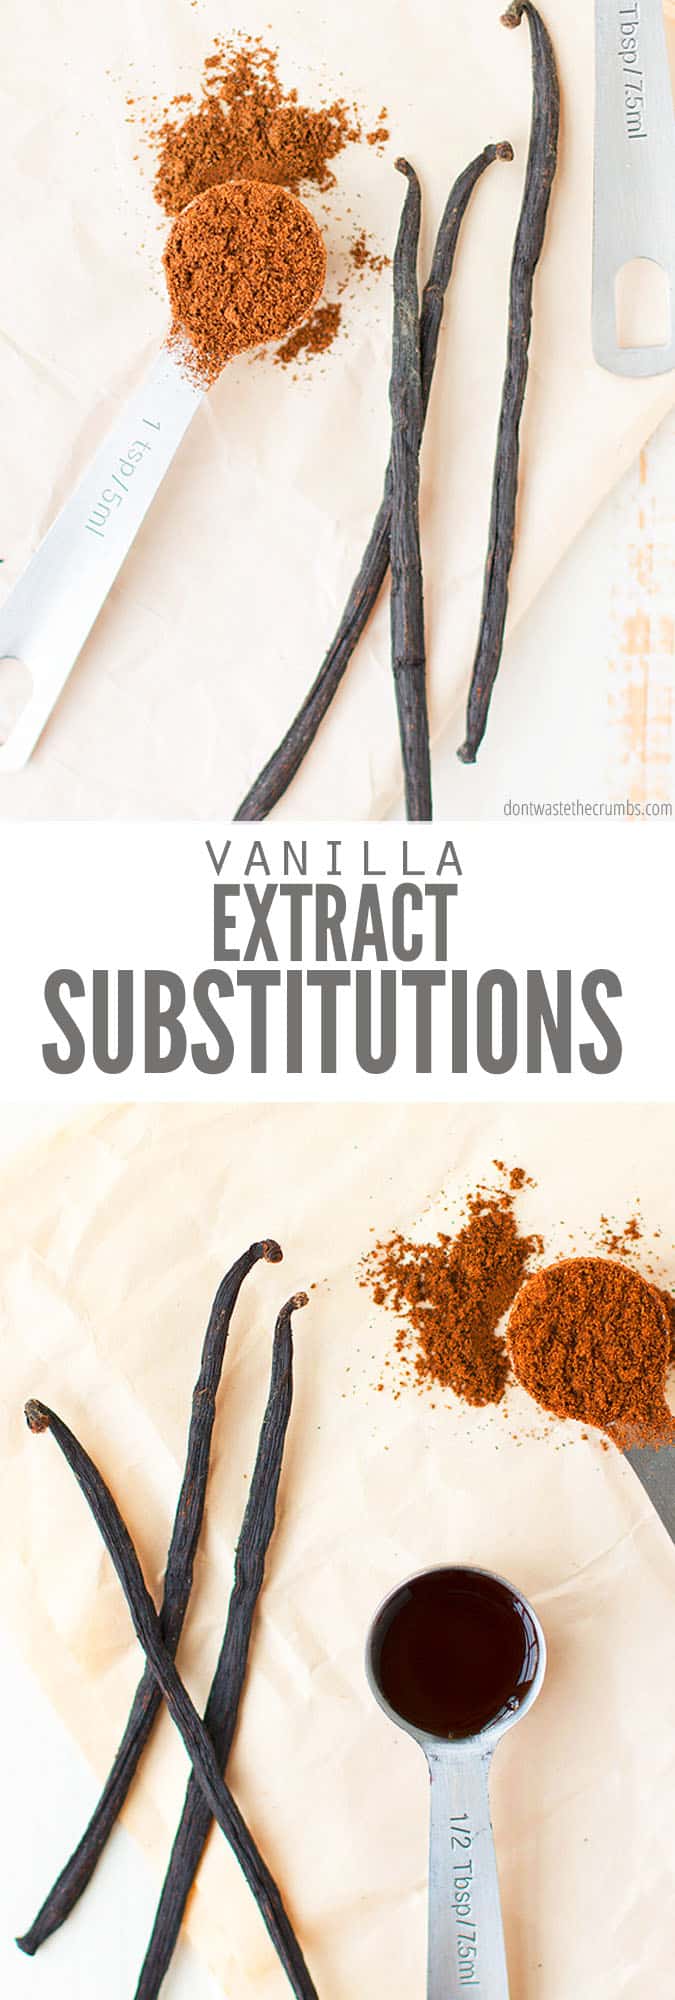 vanilla extract substitute in cakes